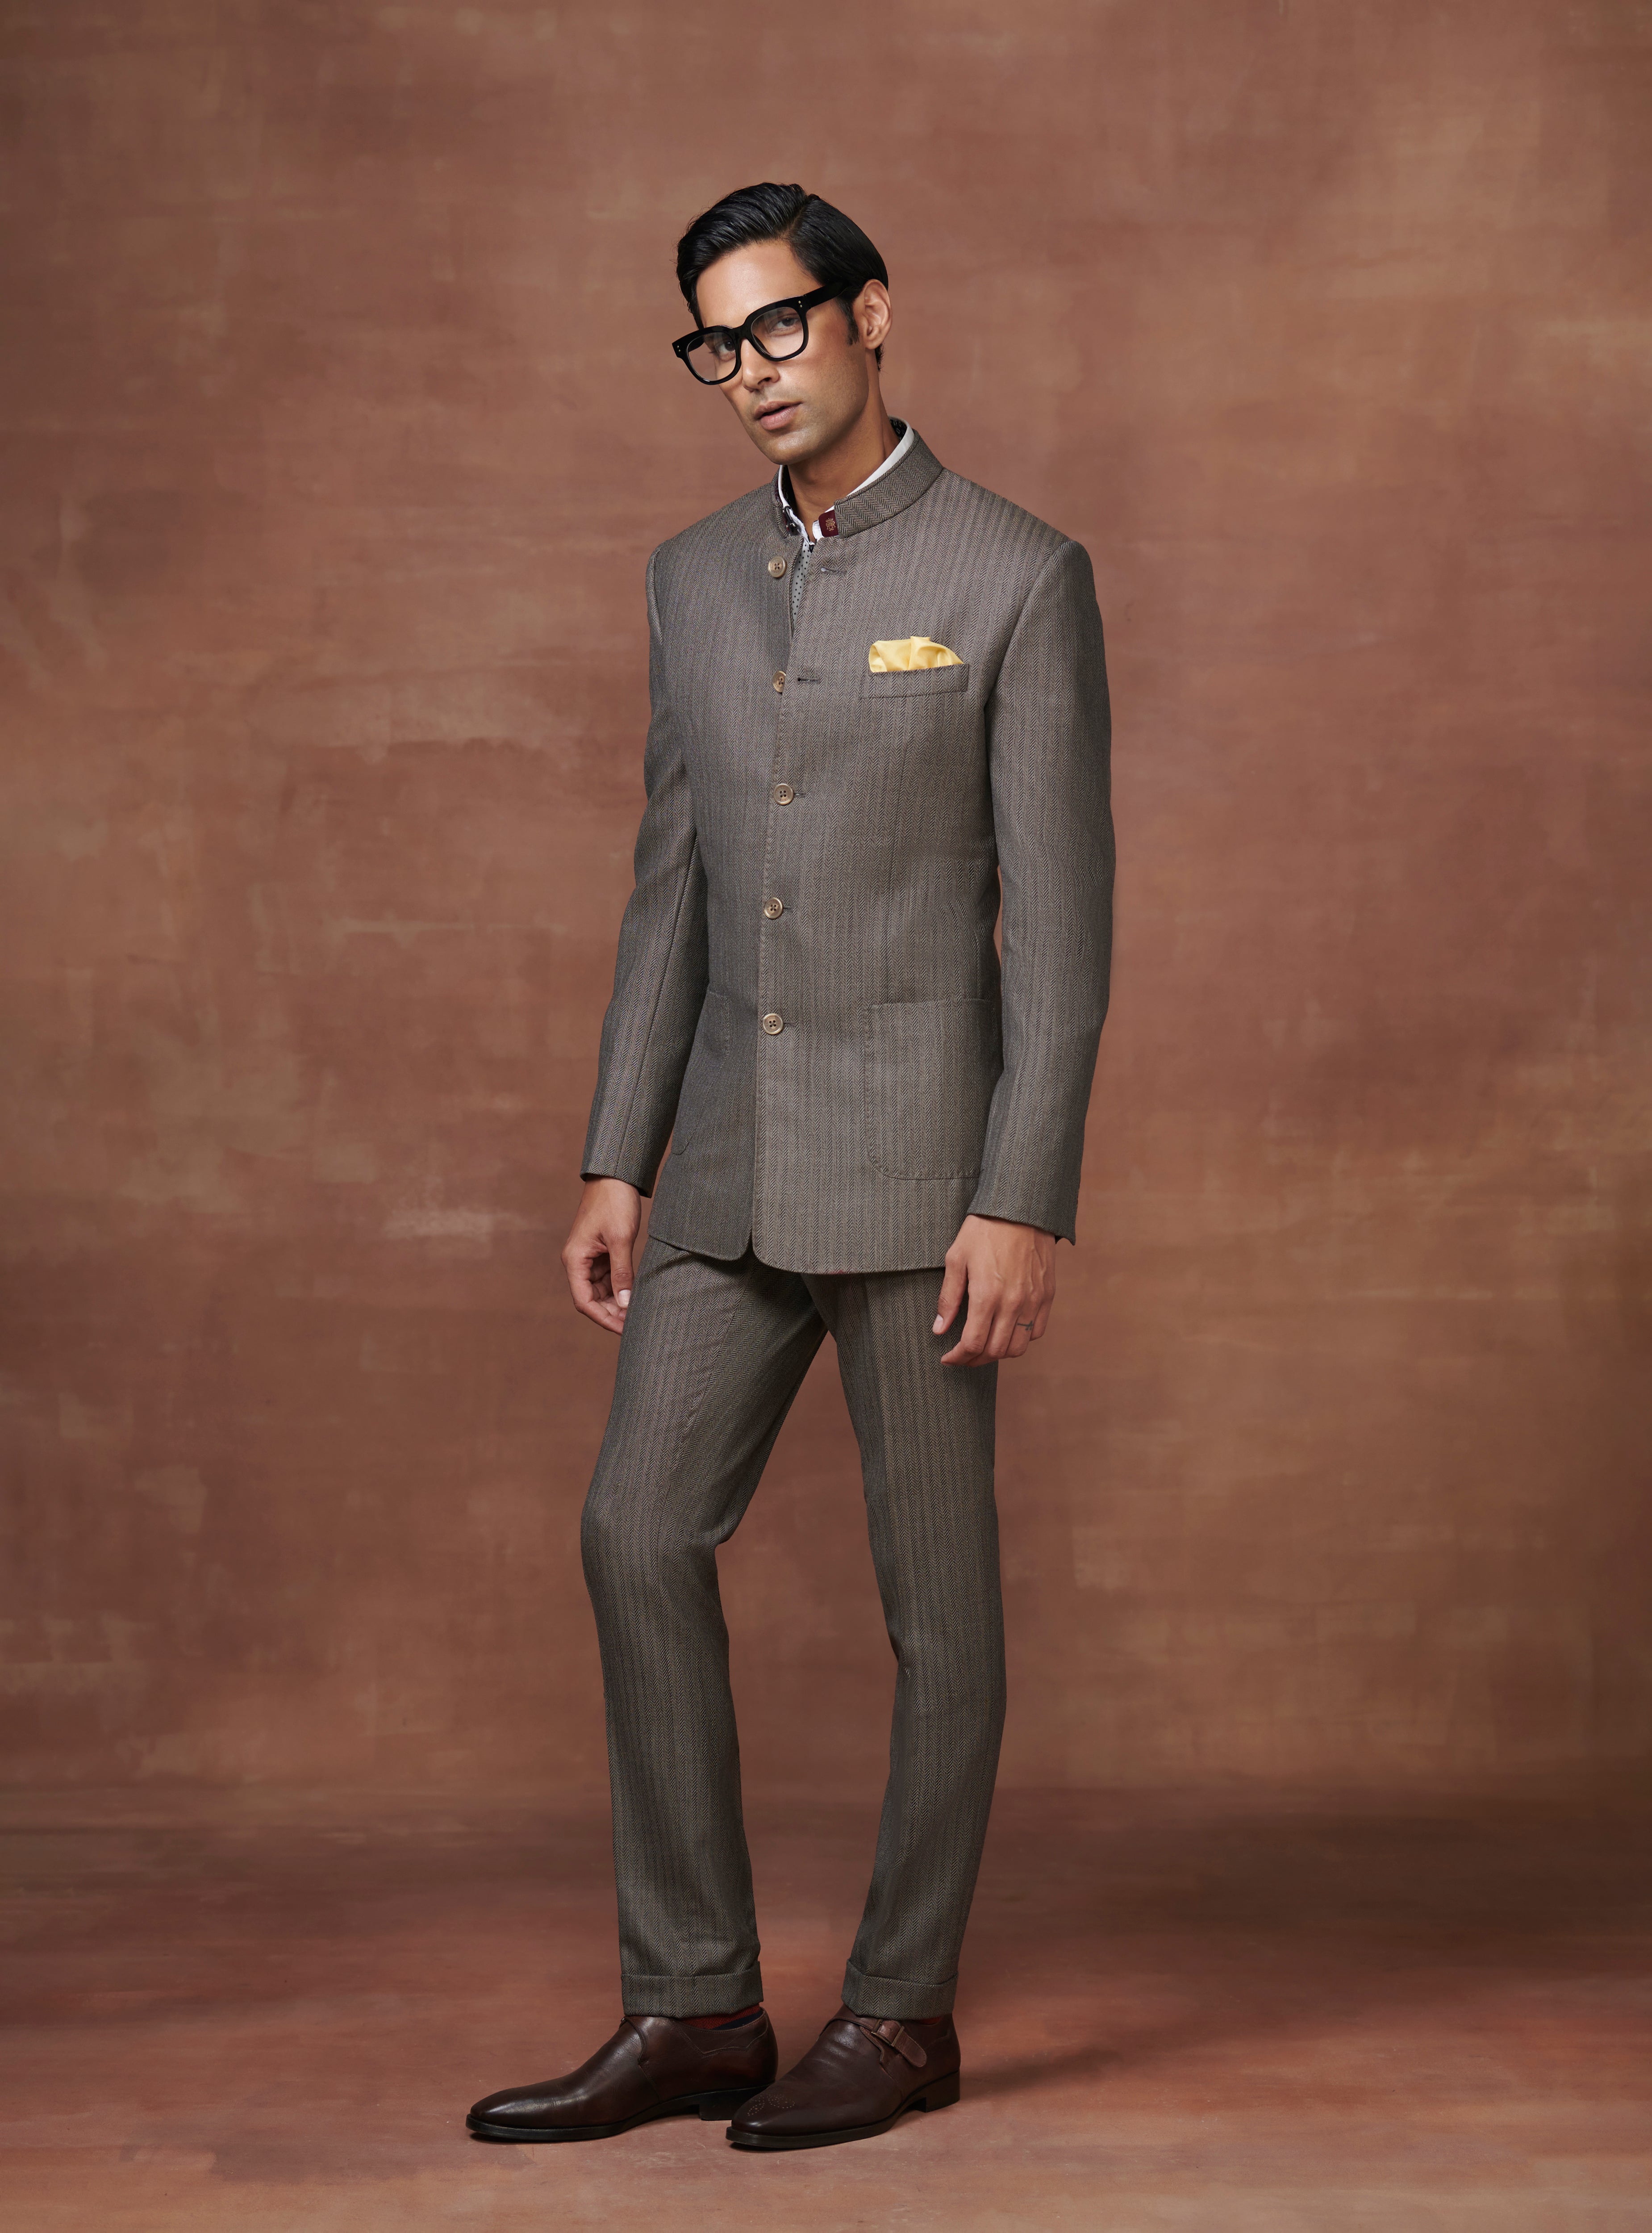 Benefits of Jodhpuri Suit | Traditional Indian Formal Outfit | Jodhpuri Suit  for Men - YouTube